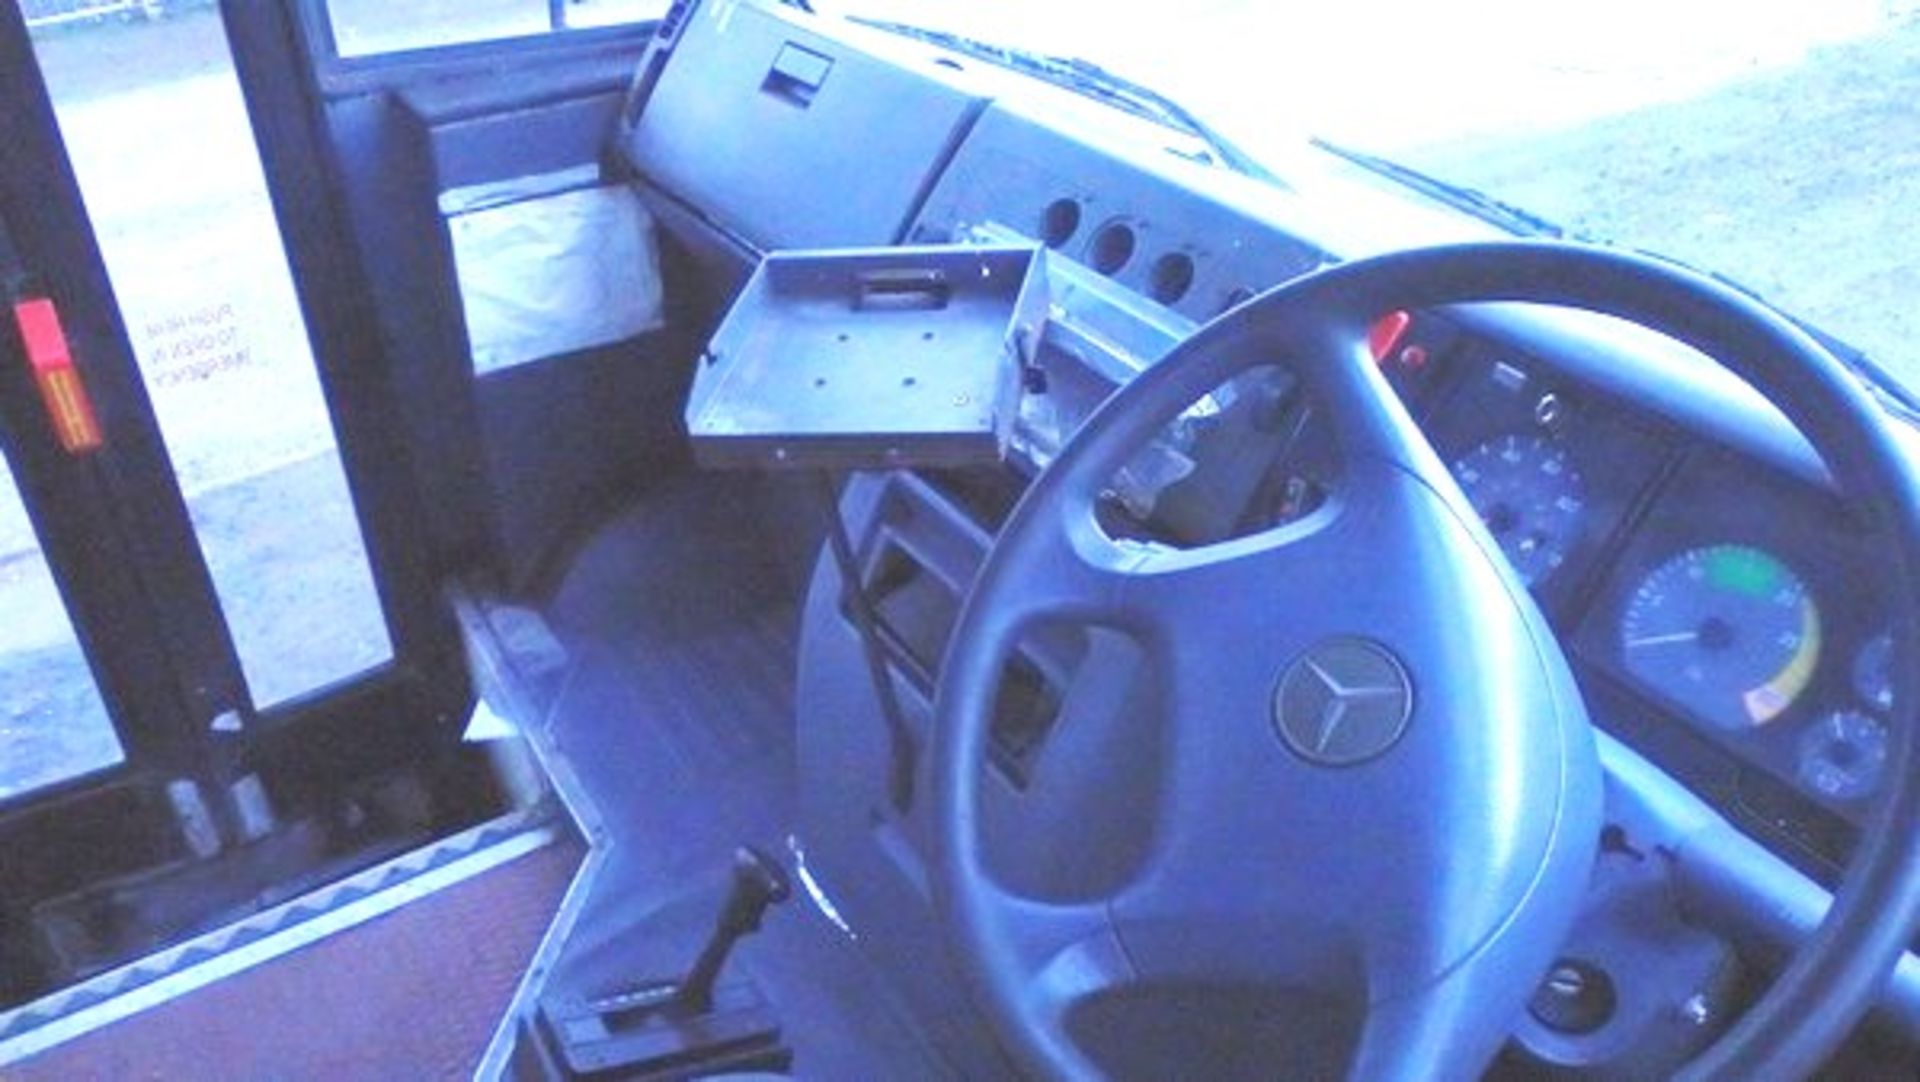 MERCEDES VARIO - 4250cc
Body: 4 Dr Minibus
Color: White
First Reg: 01/08/2000
Doors: 4
MOT: 07/05/ - Image 3 of 18